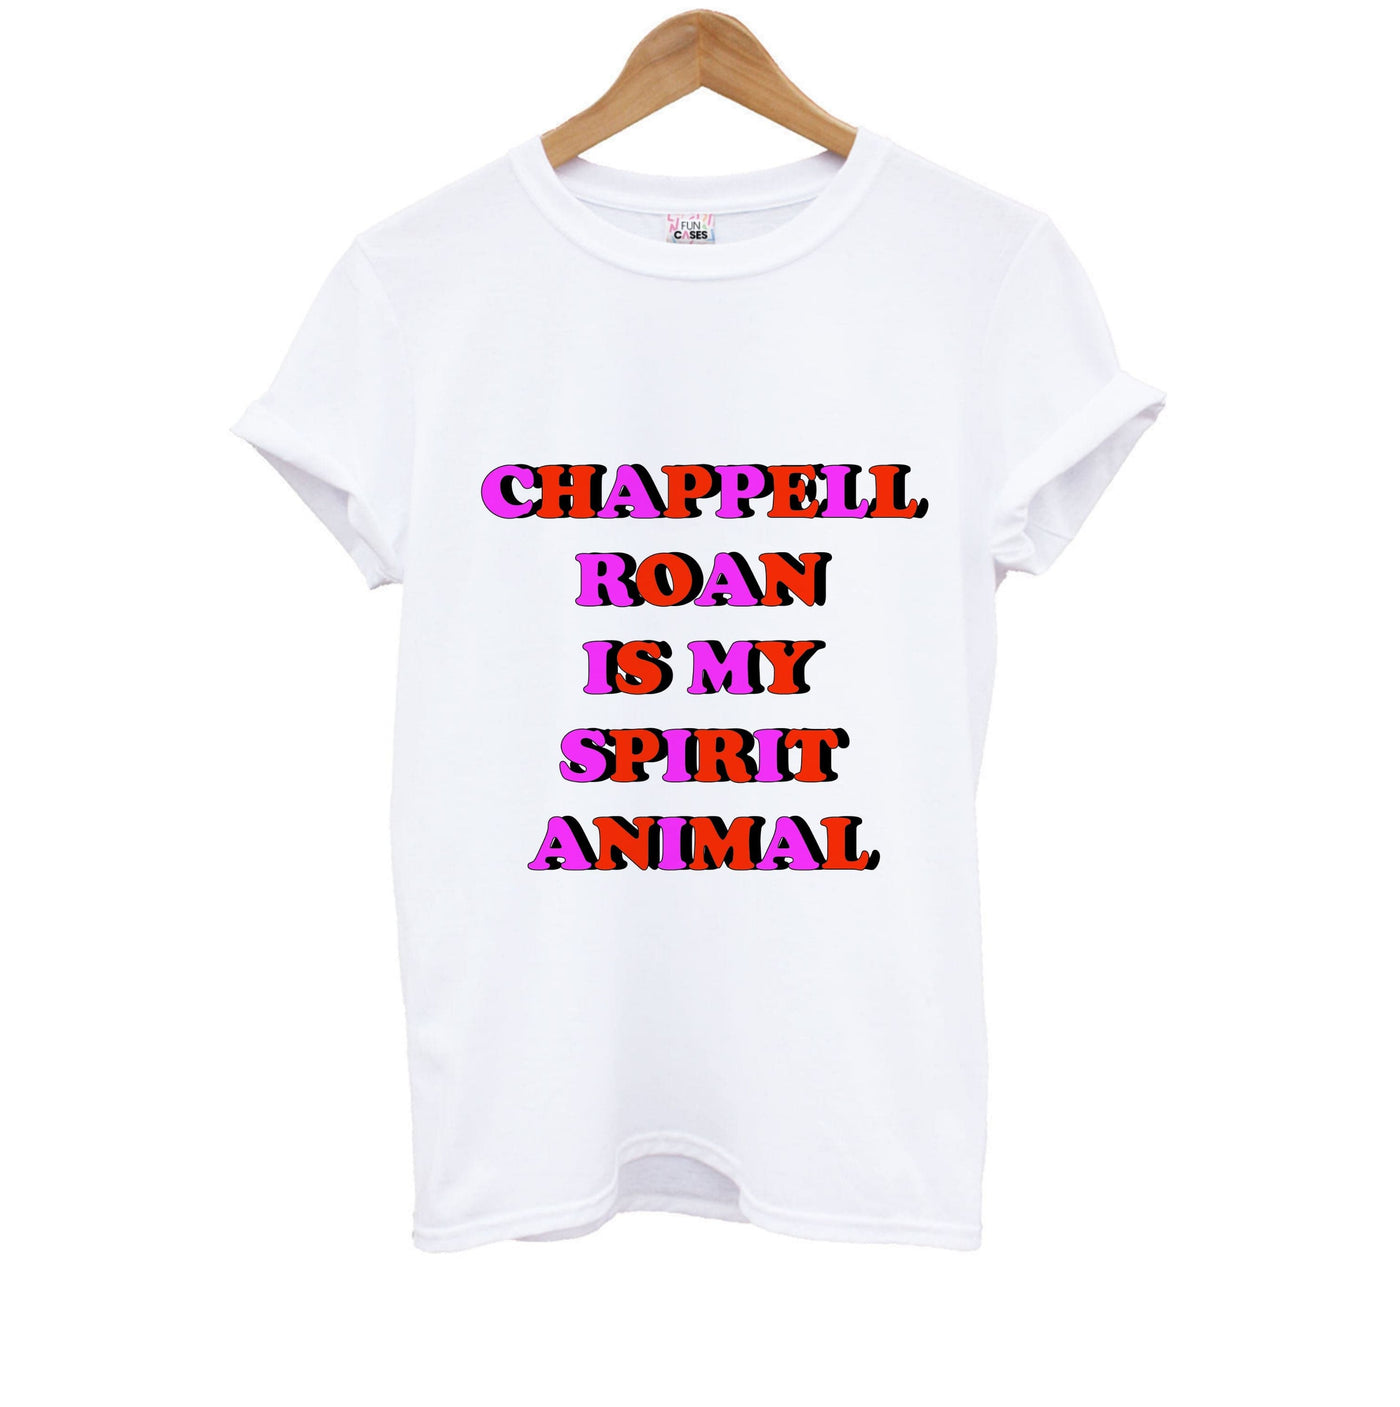 Chappell Roan Is My Spirit Animal Kids T-Shirt